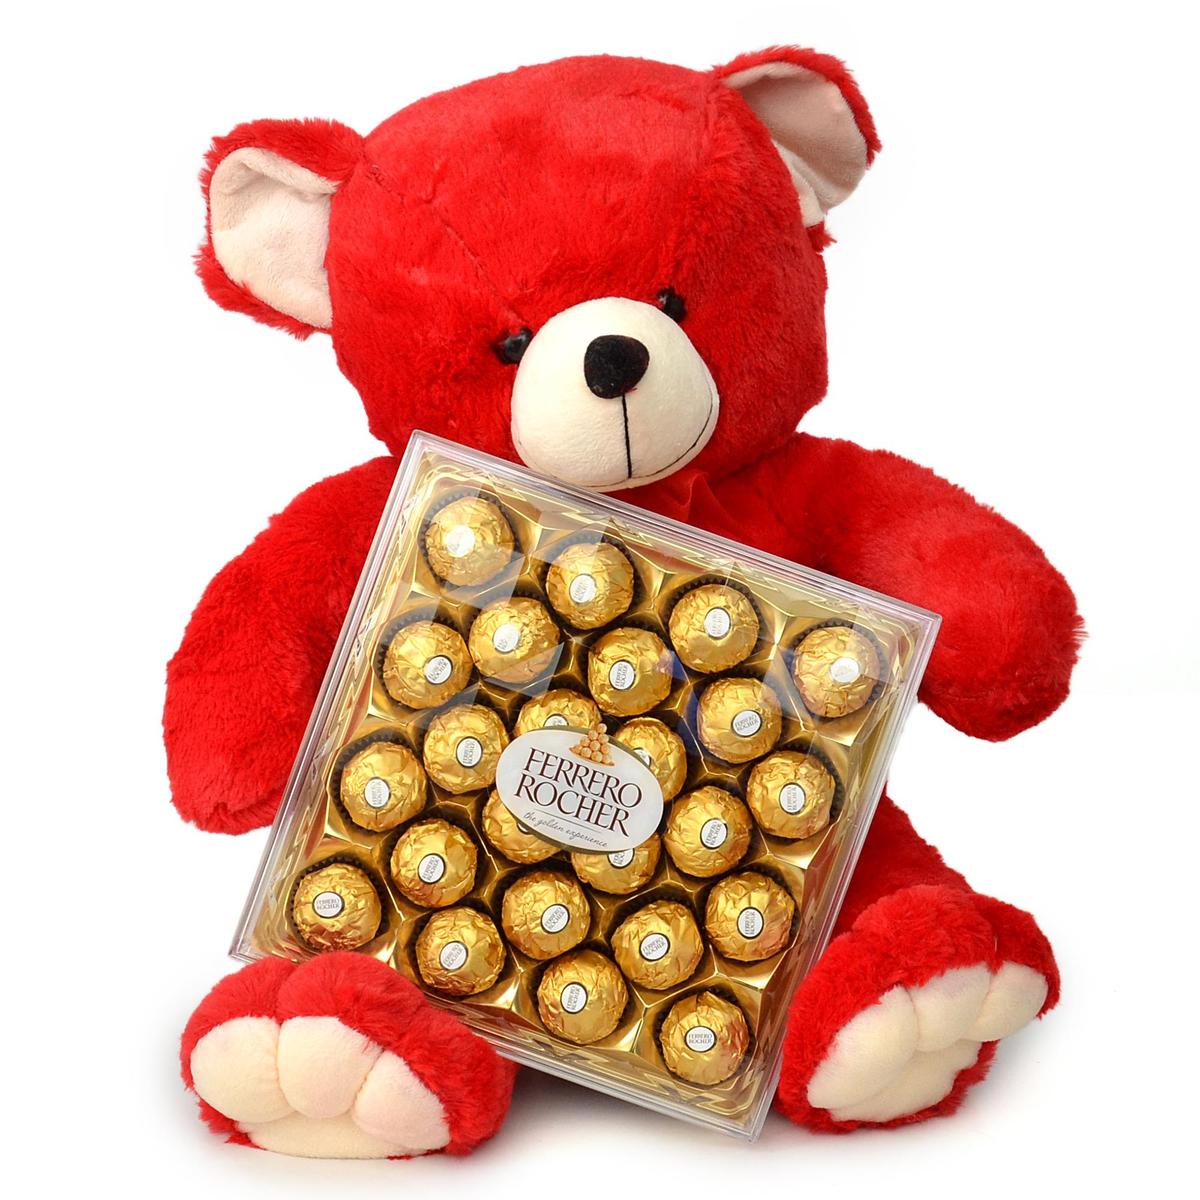 Teddy Bear And Chocolate Chocolates On Boss Day